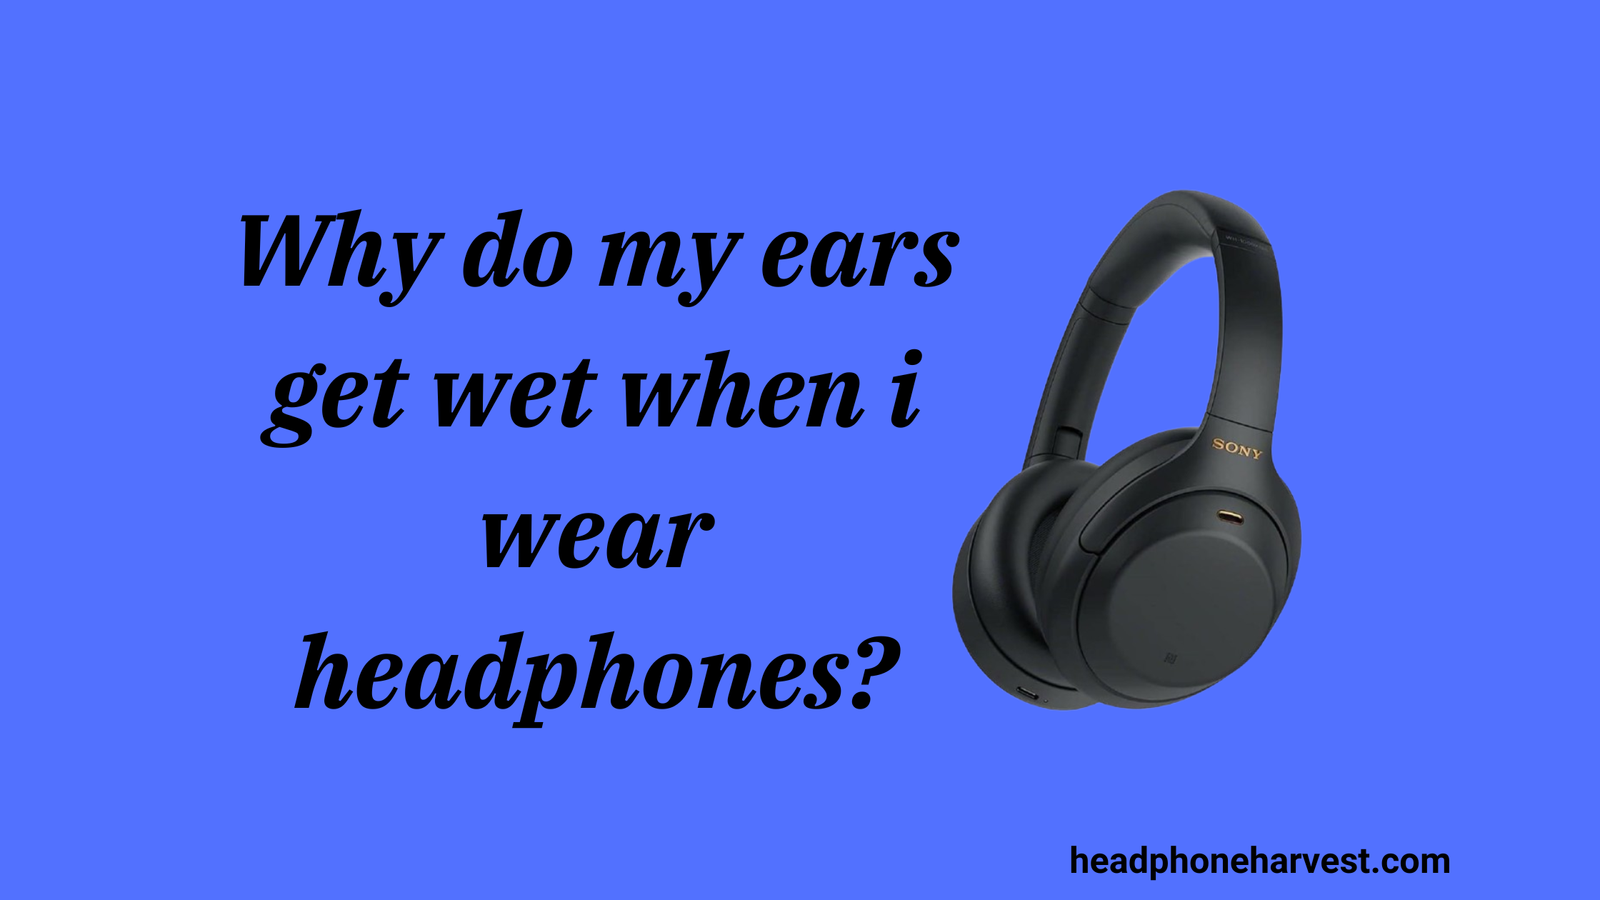 Why do my ears get wet when i wear headphones